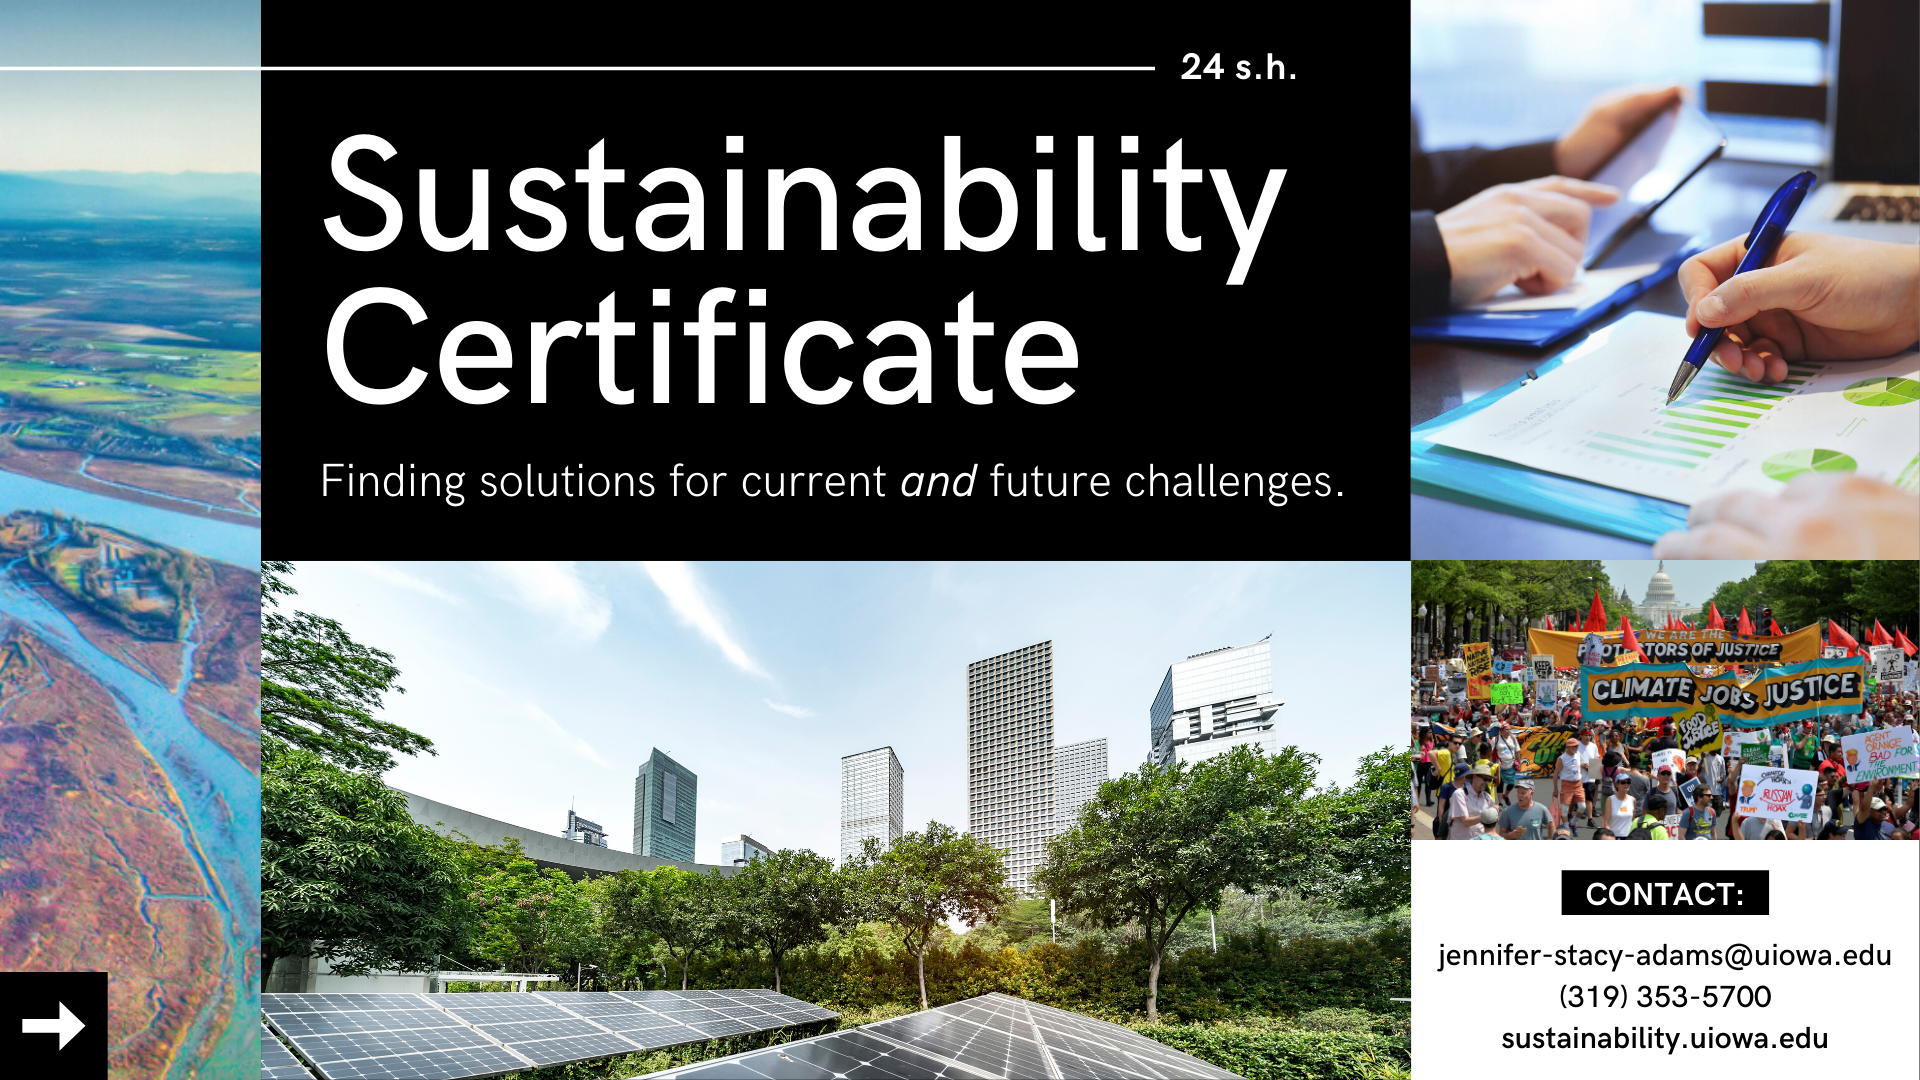 Sustainability Certificate – more information at sustainability.uiowa.edu